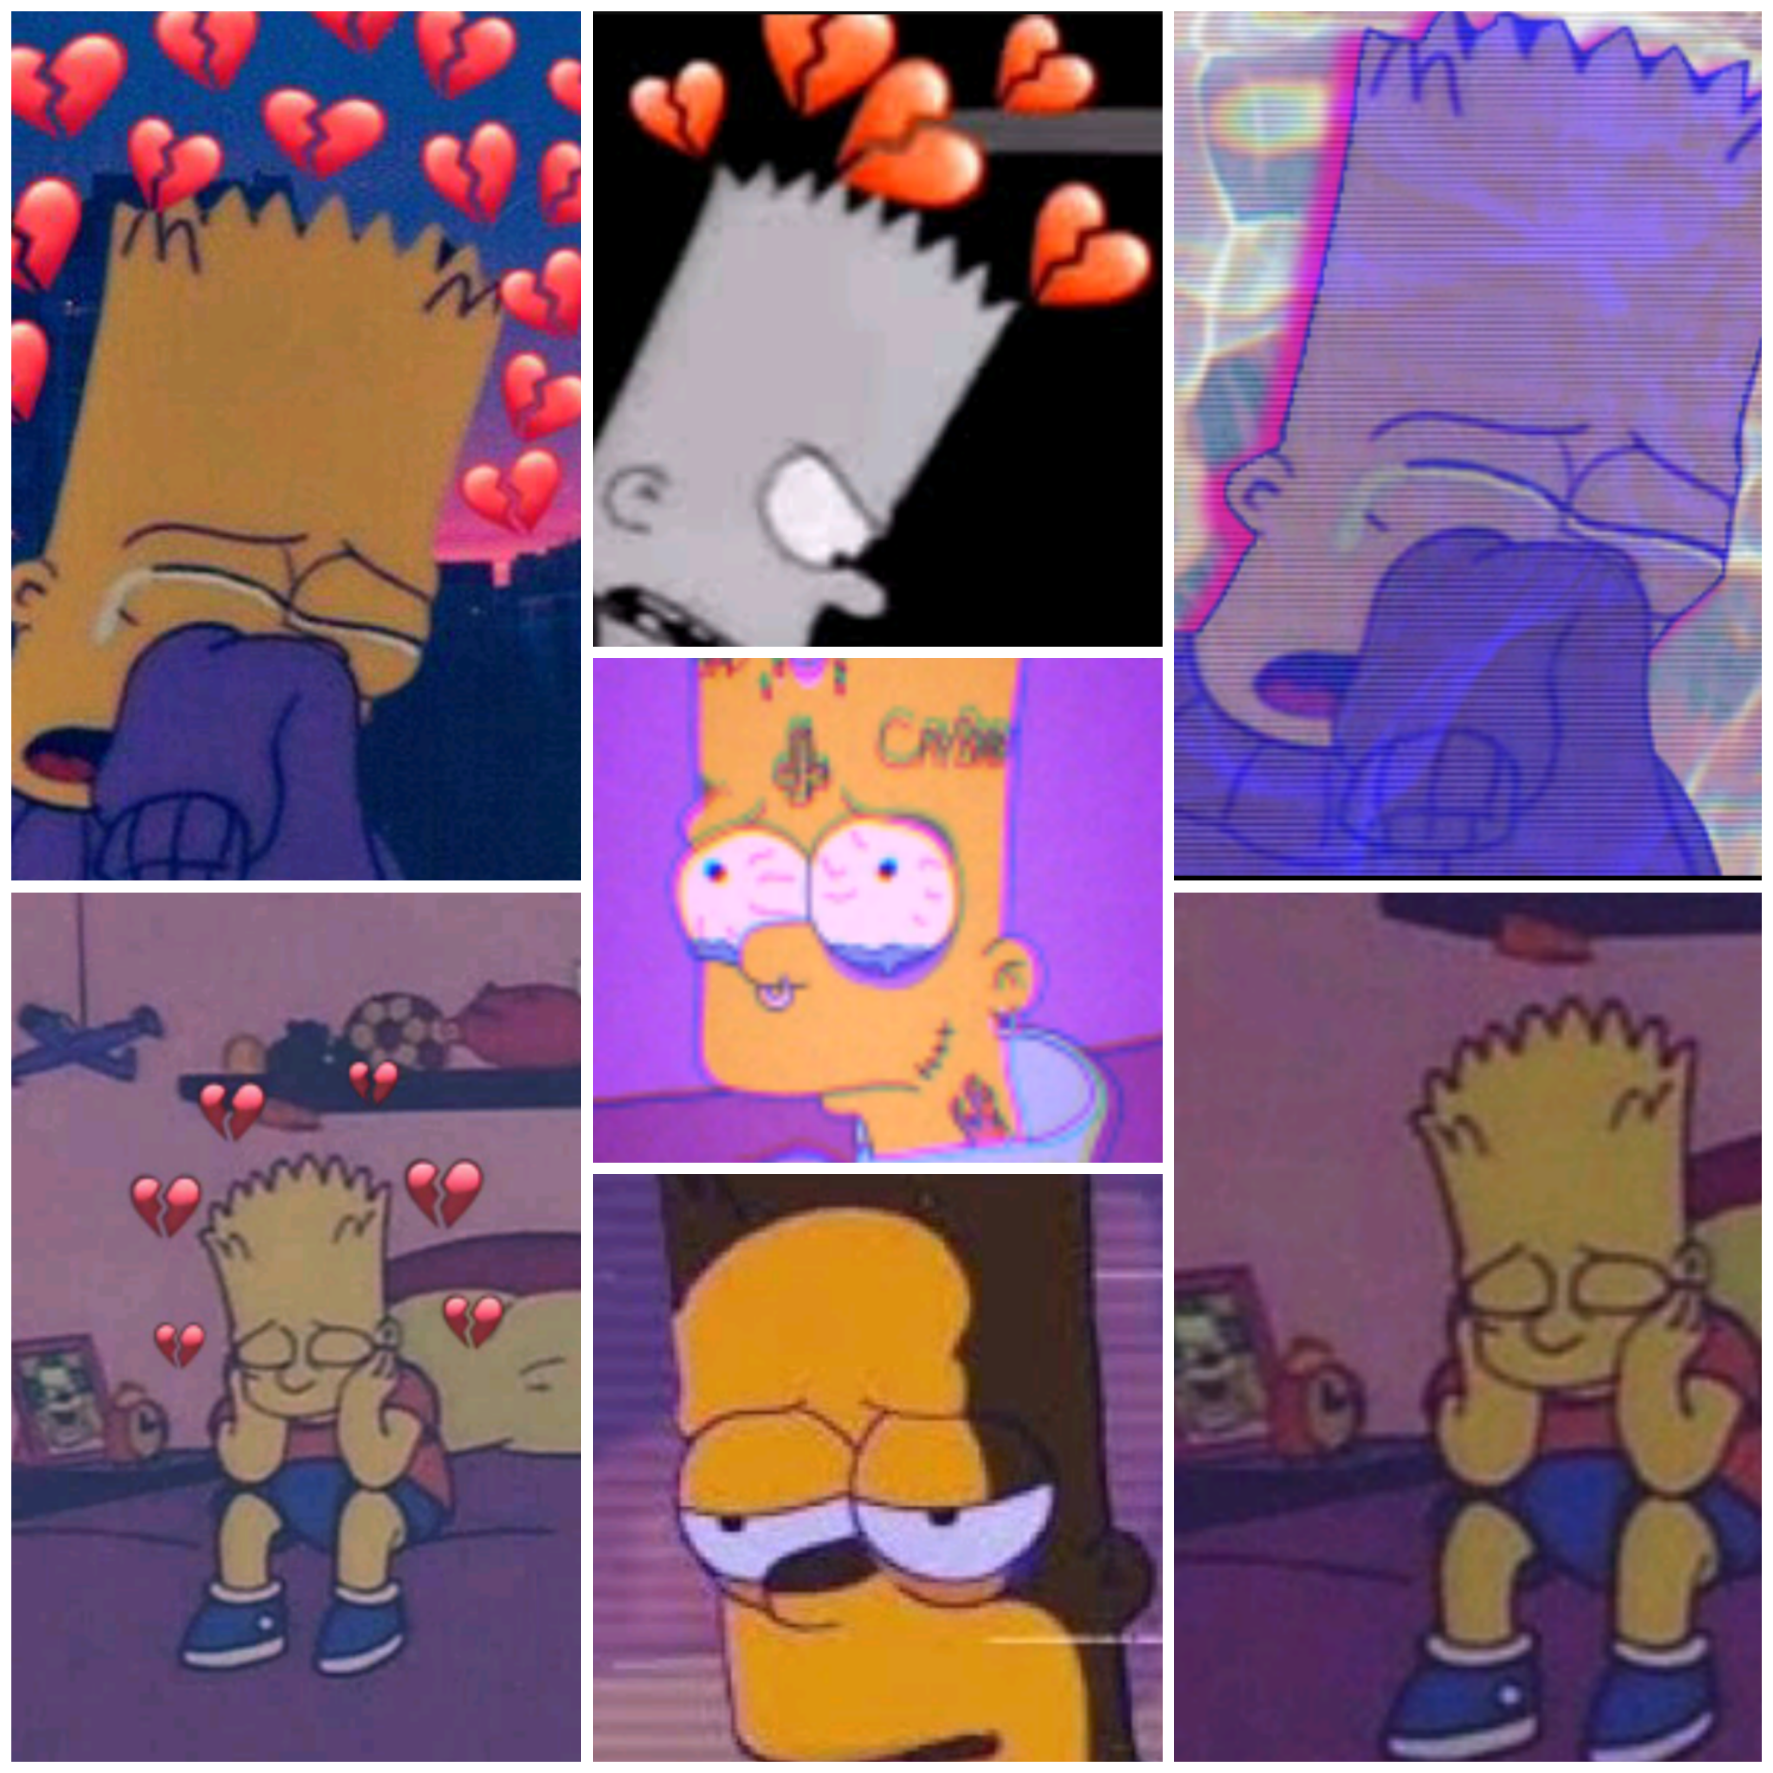 Bart Simpson sad 😩😭💗😓💔 - Image by dreathebaby